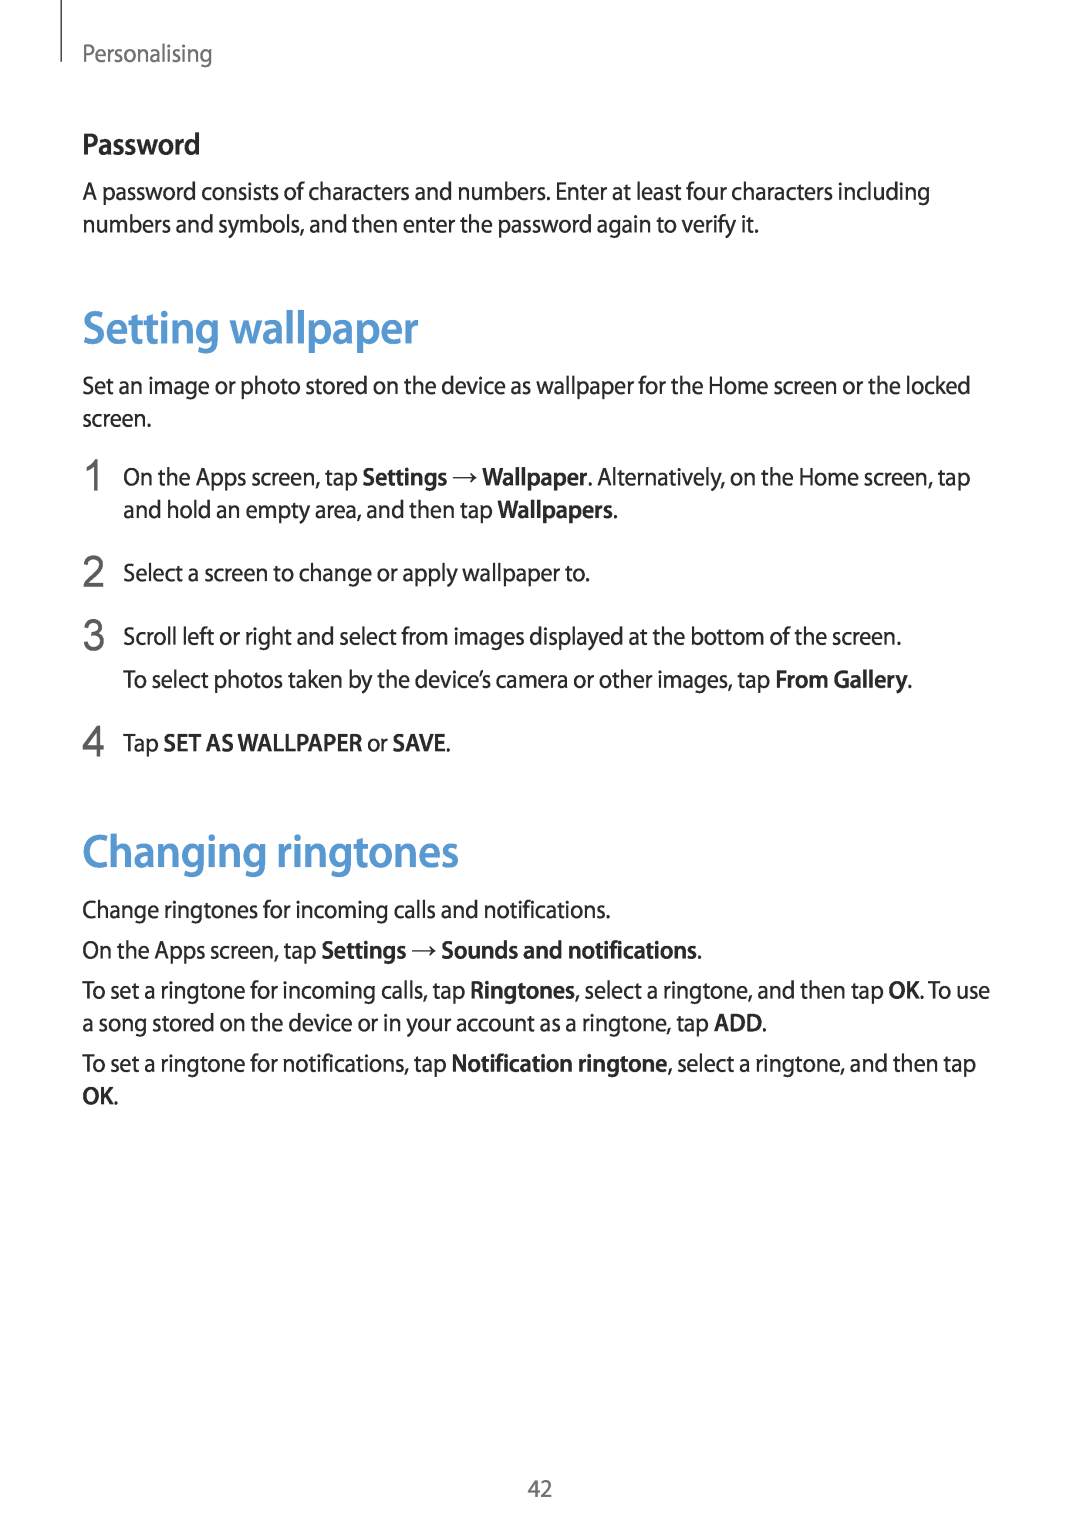 Samsung SM-G901FZBABAL manual Setting wallpaper, Changing ringtones, Password, Tap SET AS WALLPAPER or SAVE, Personalising 